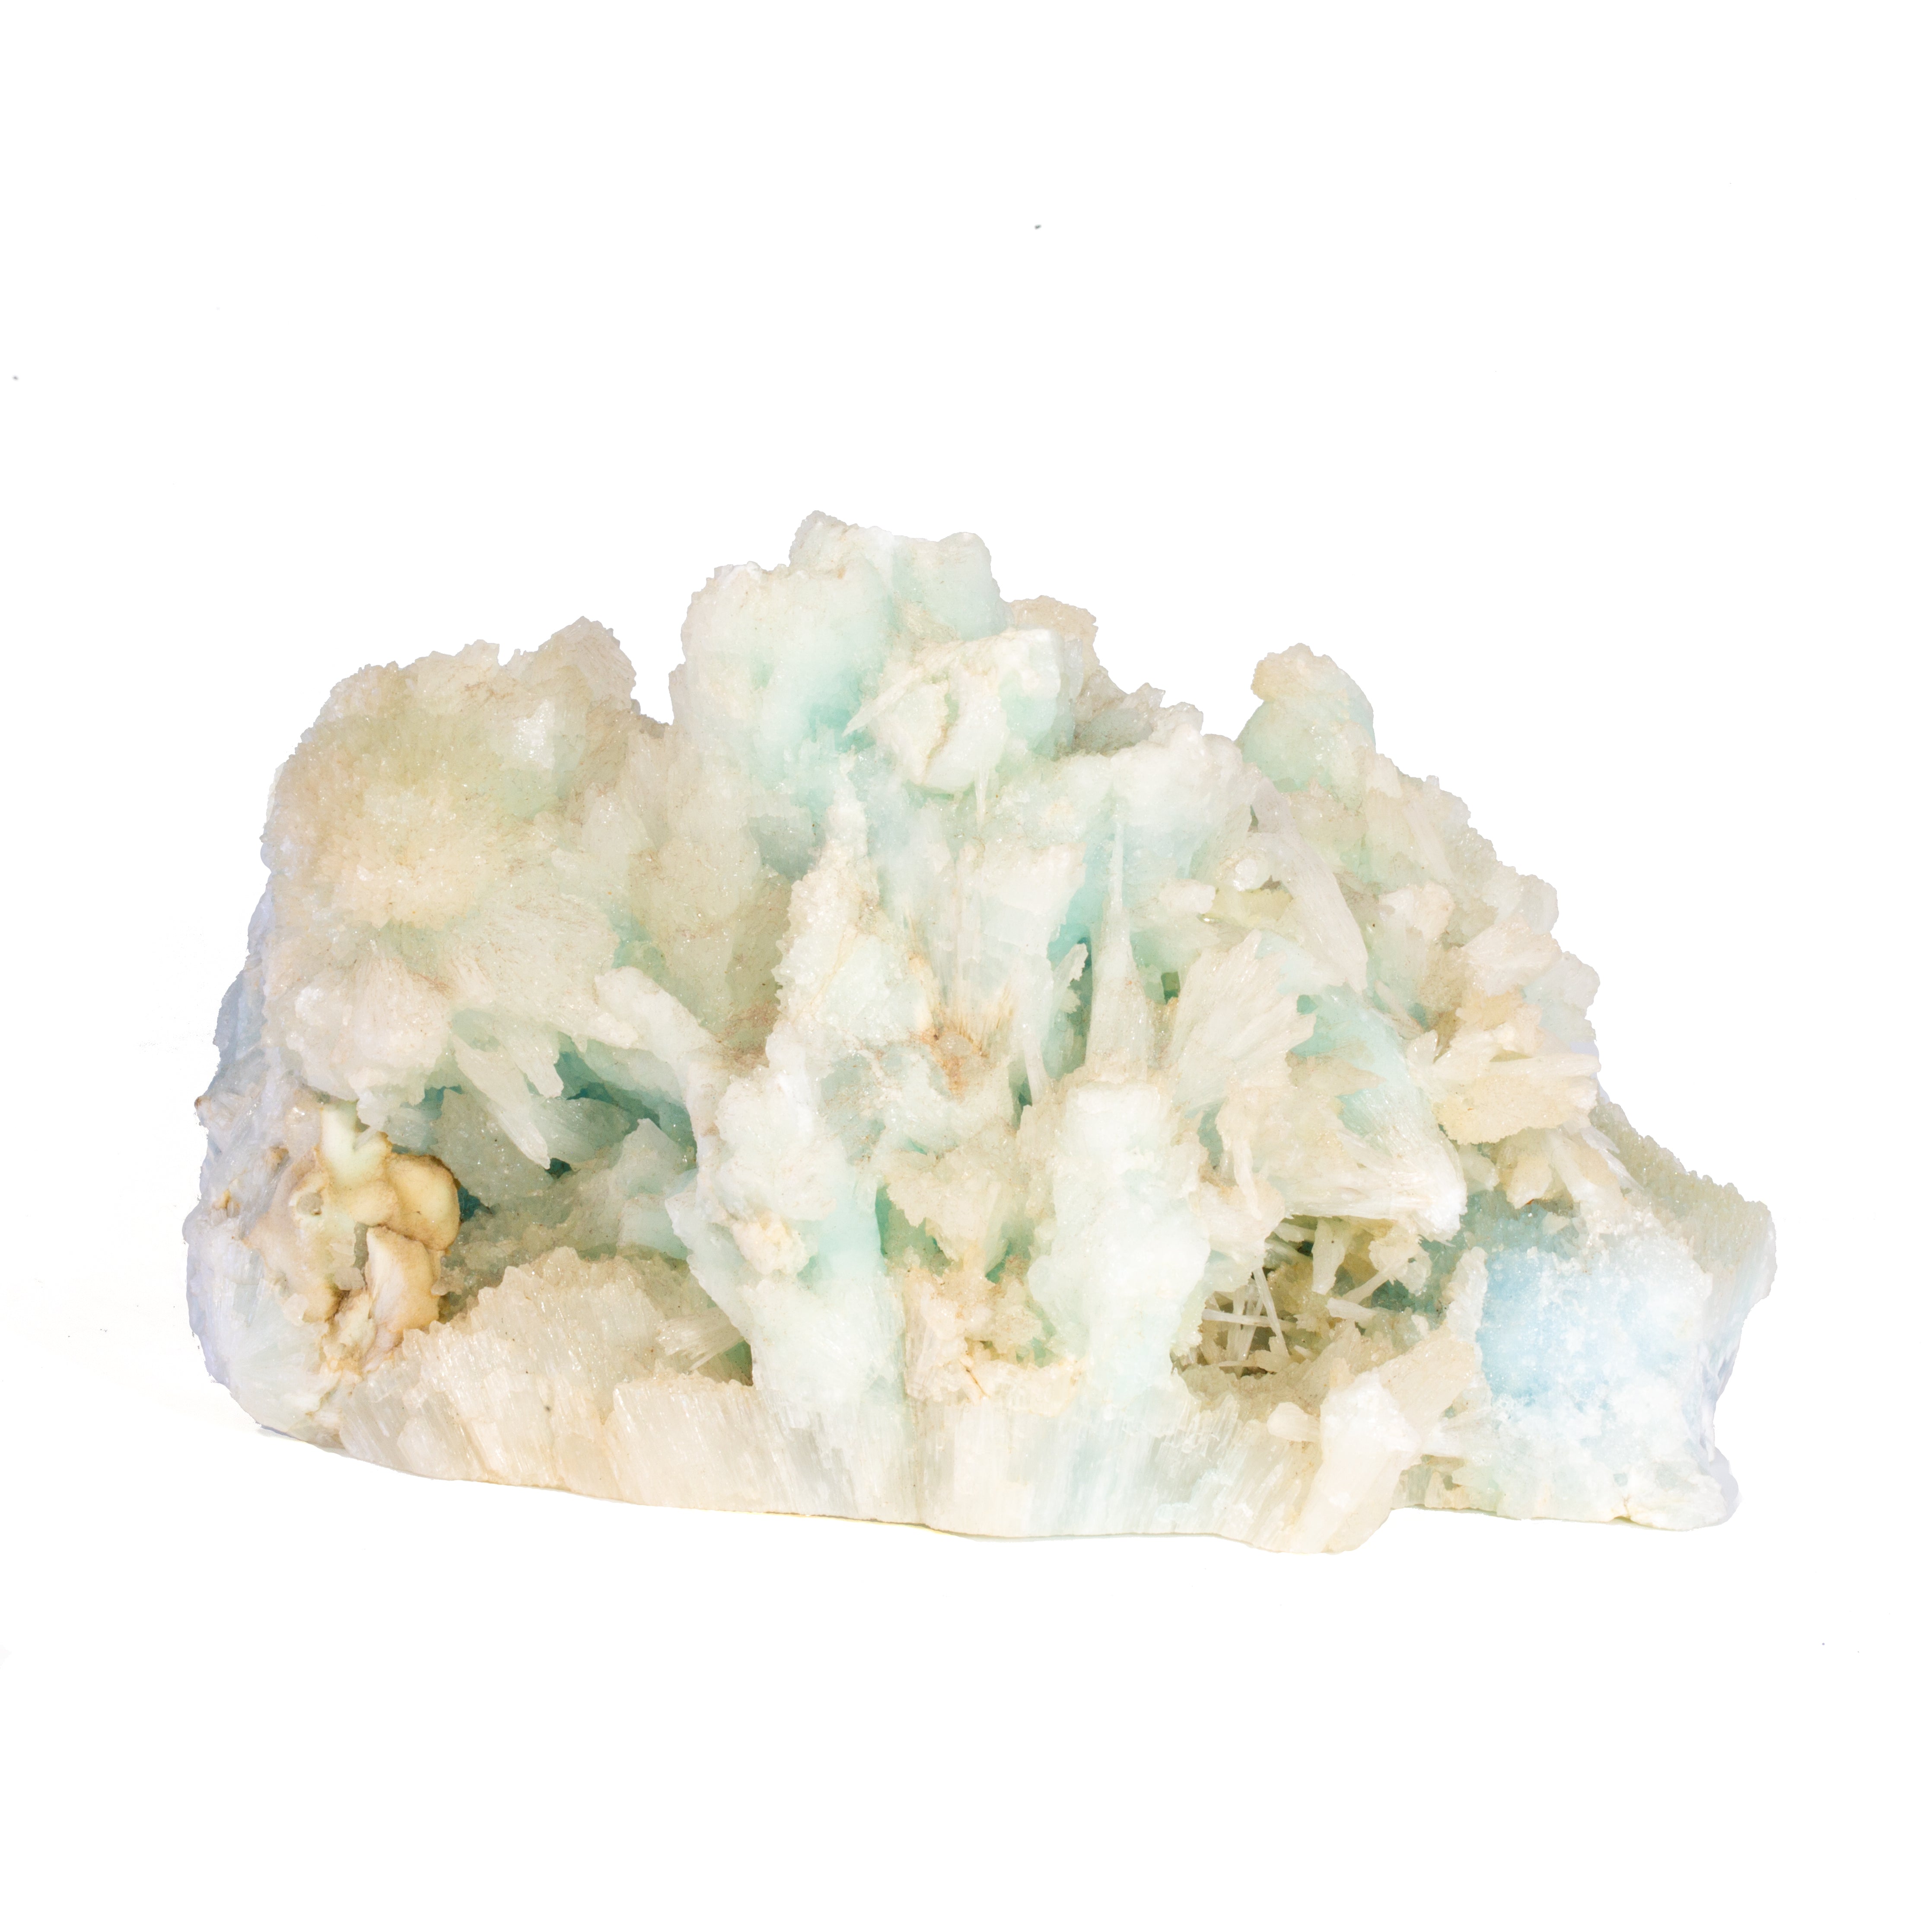 Blue Aragonite 4lb Natural Crystal - China - qx-254 - Crystalarium